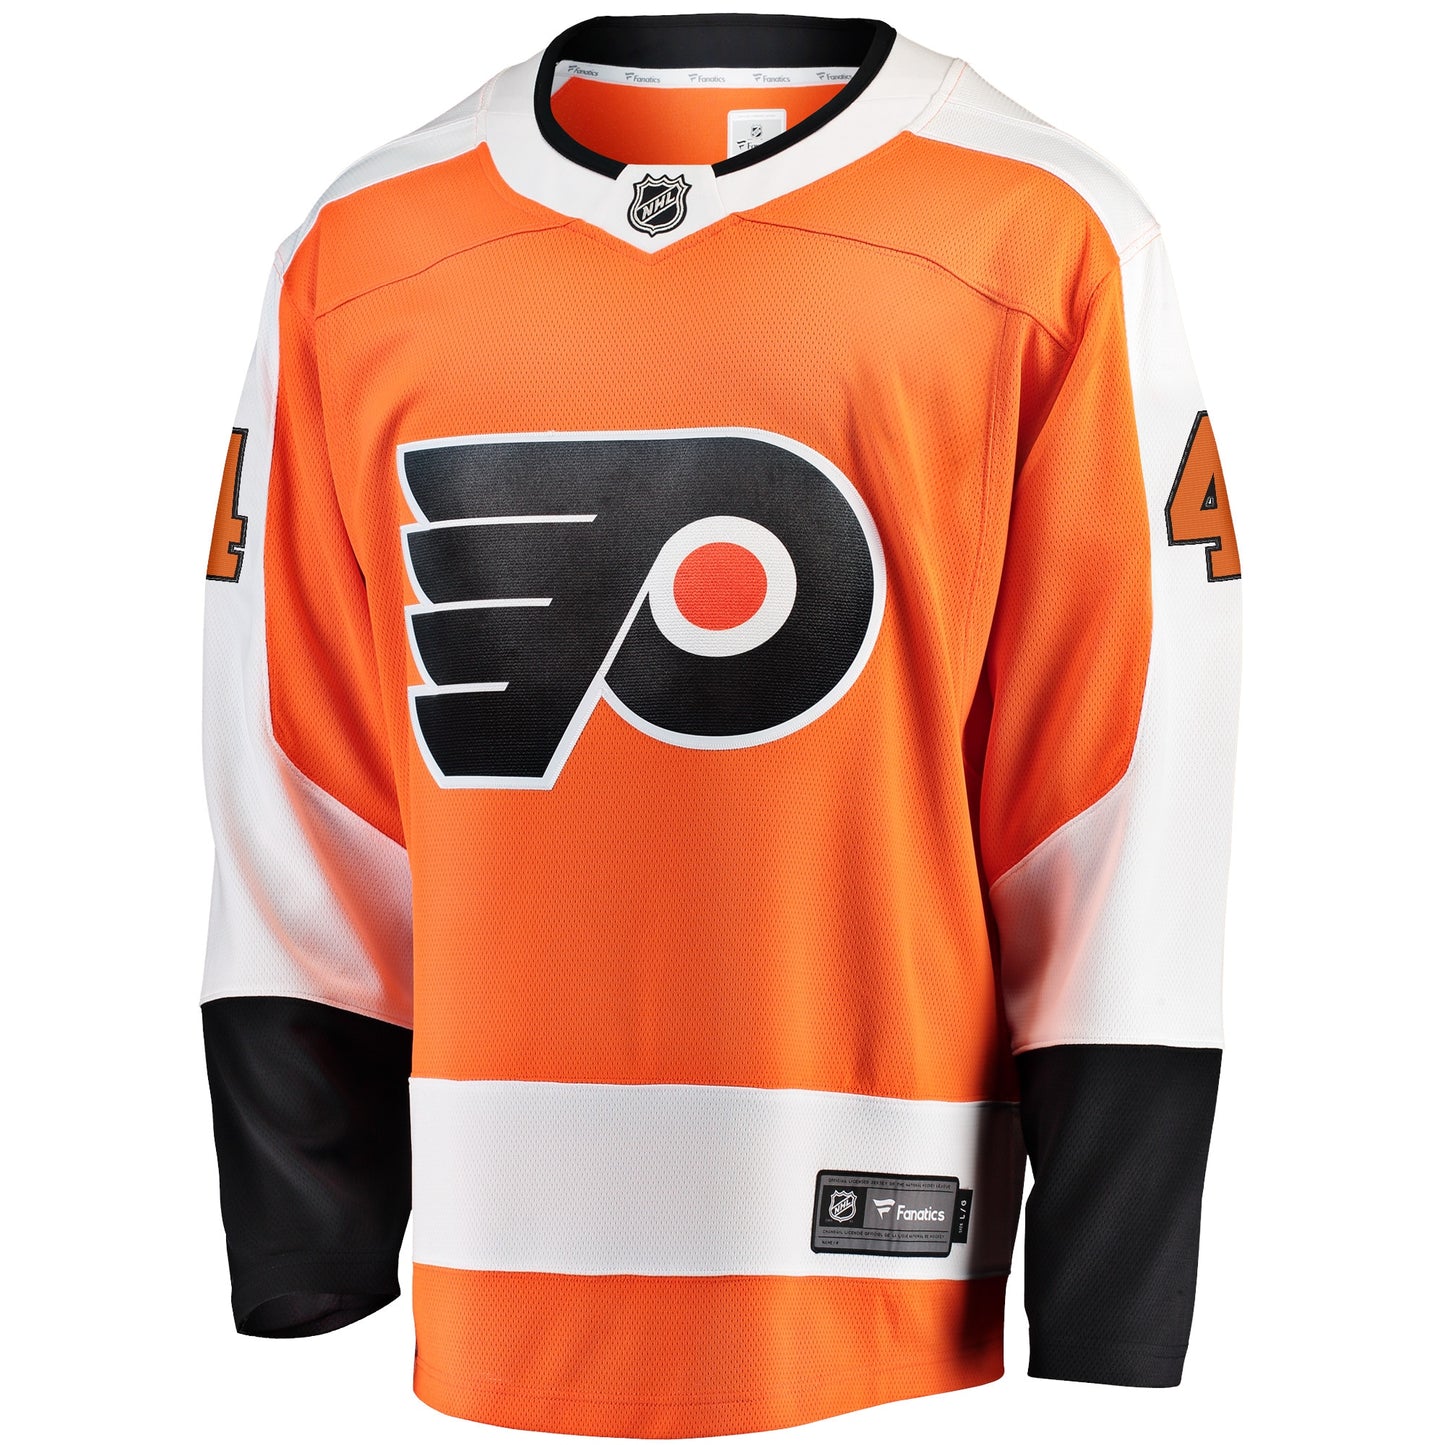 Nicolas Deslauriers Philadelphia Flyers Fanatics Branded Home Breakaway Player Jersey - Orange